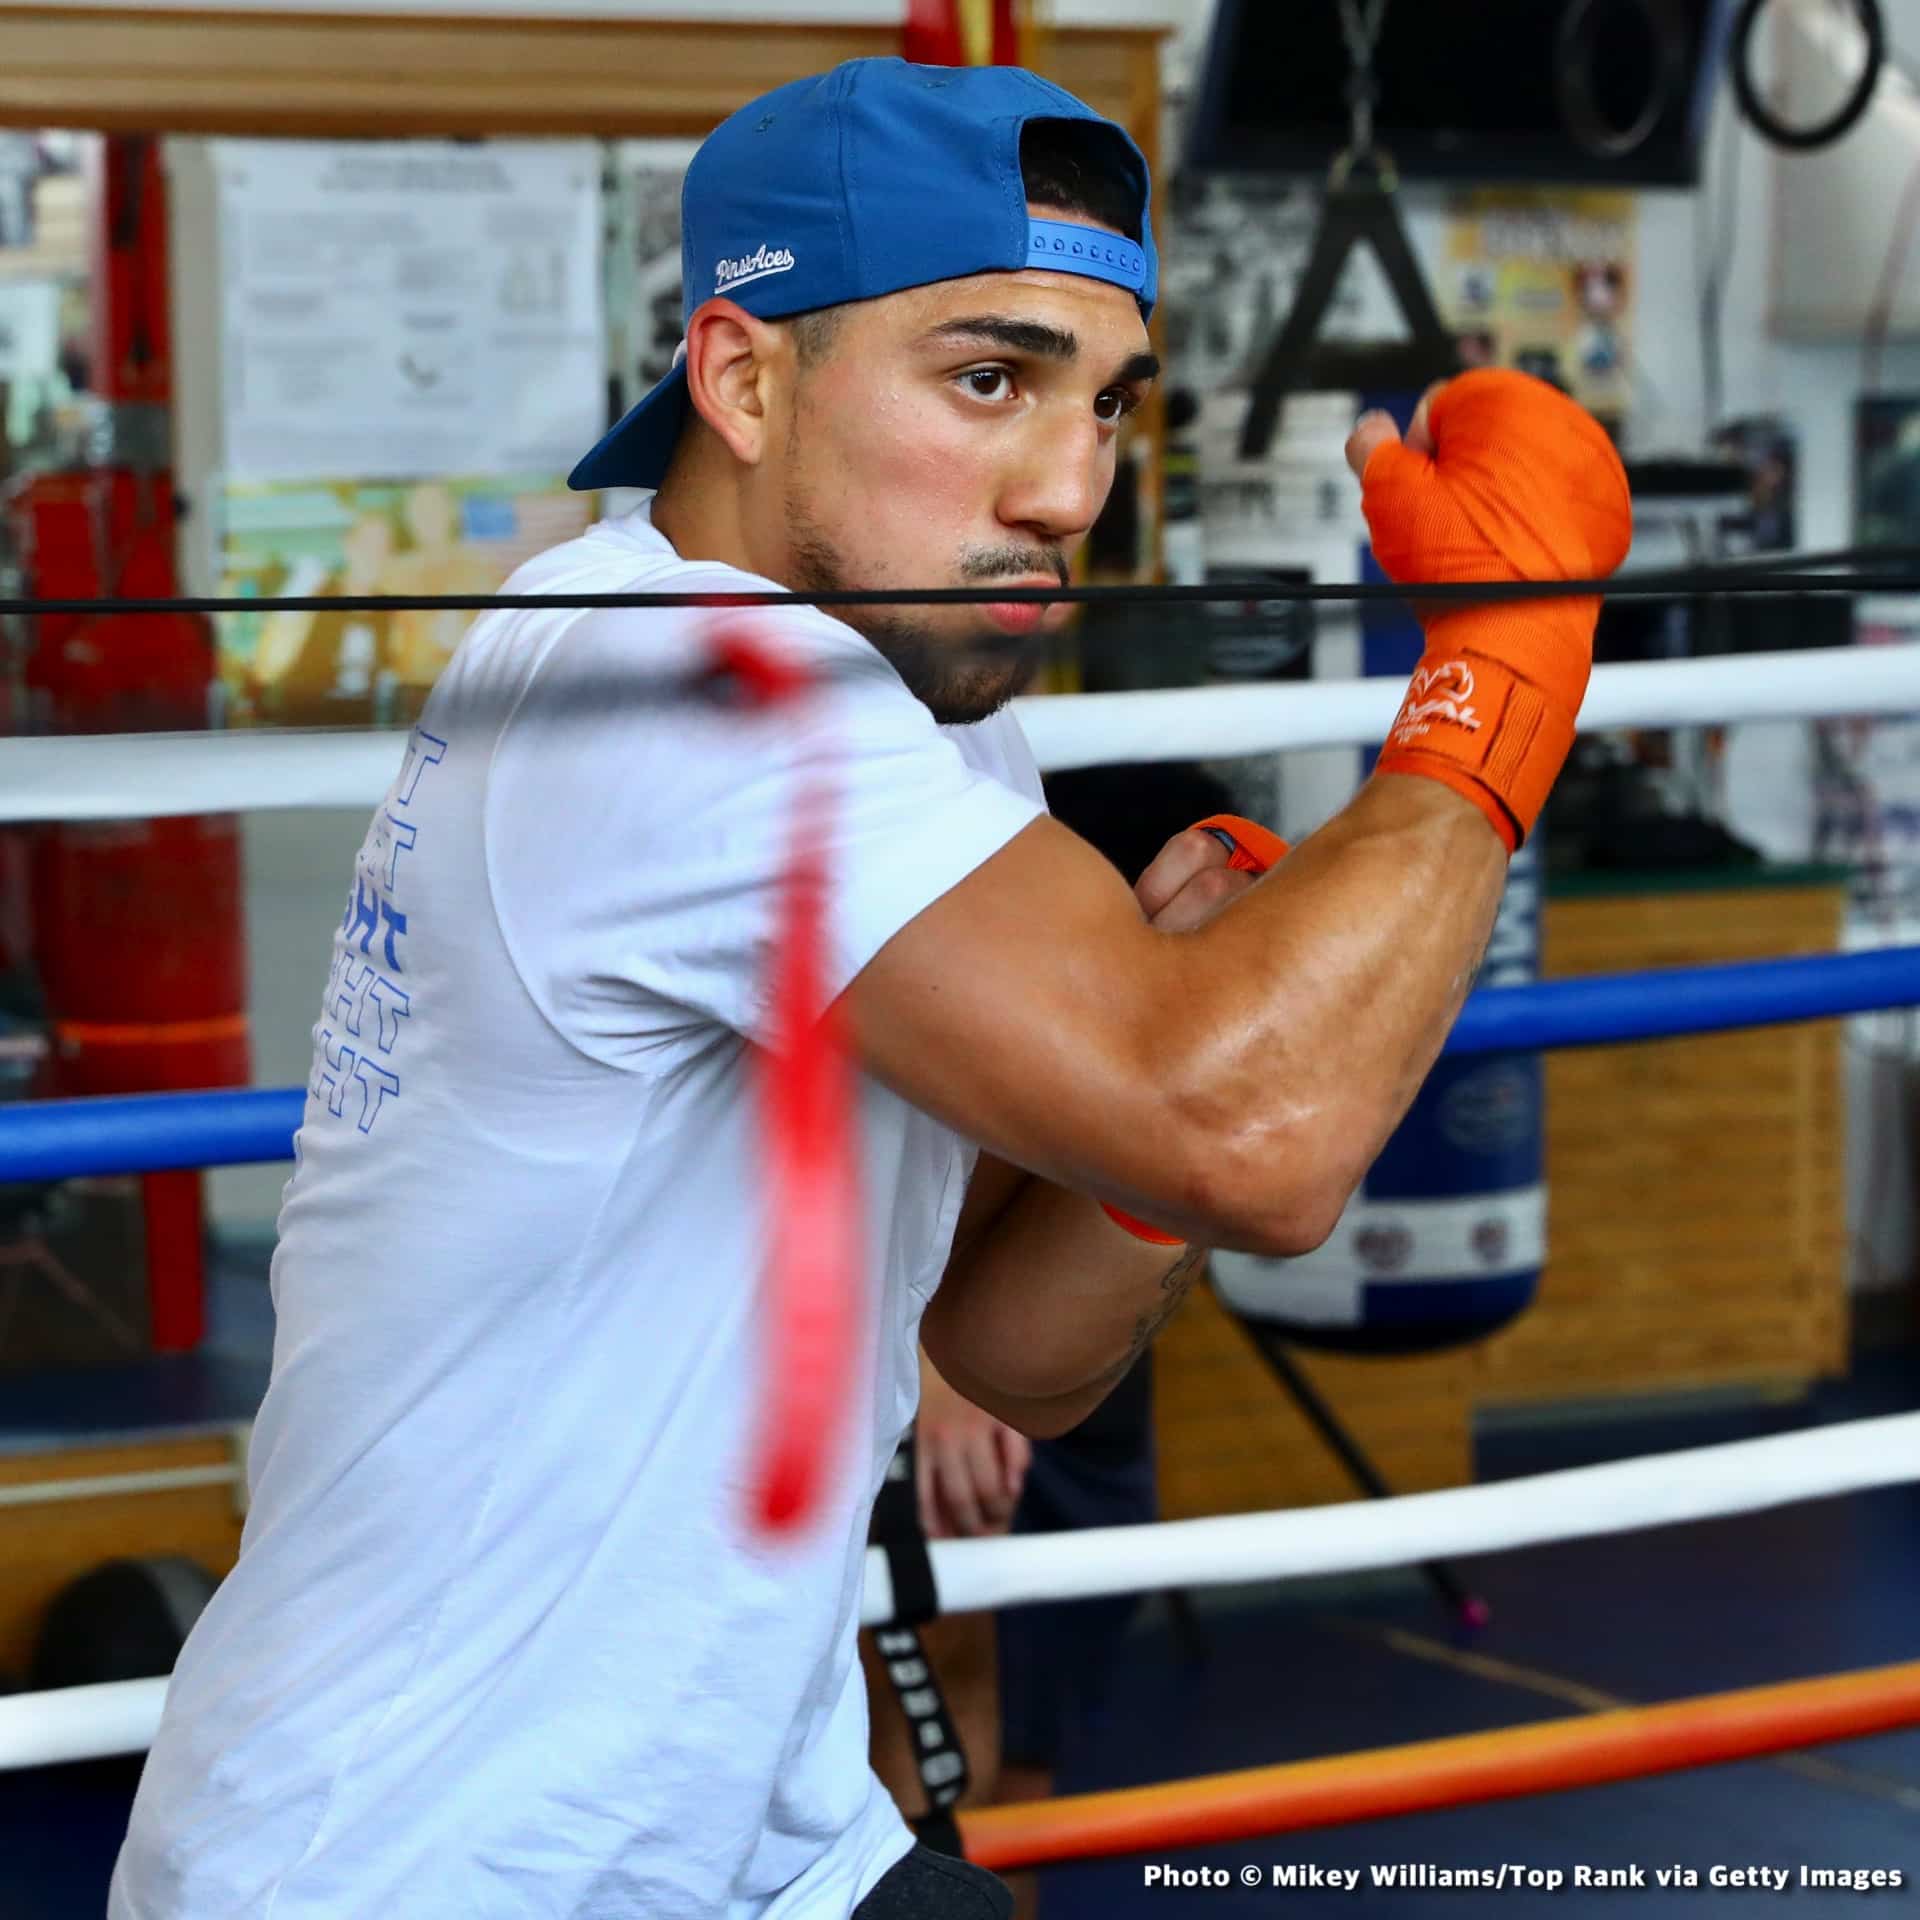 Teofimo Lopez Jr boxing image / photo